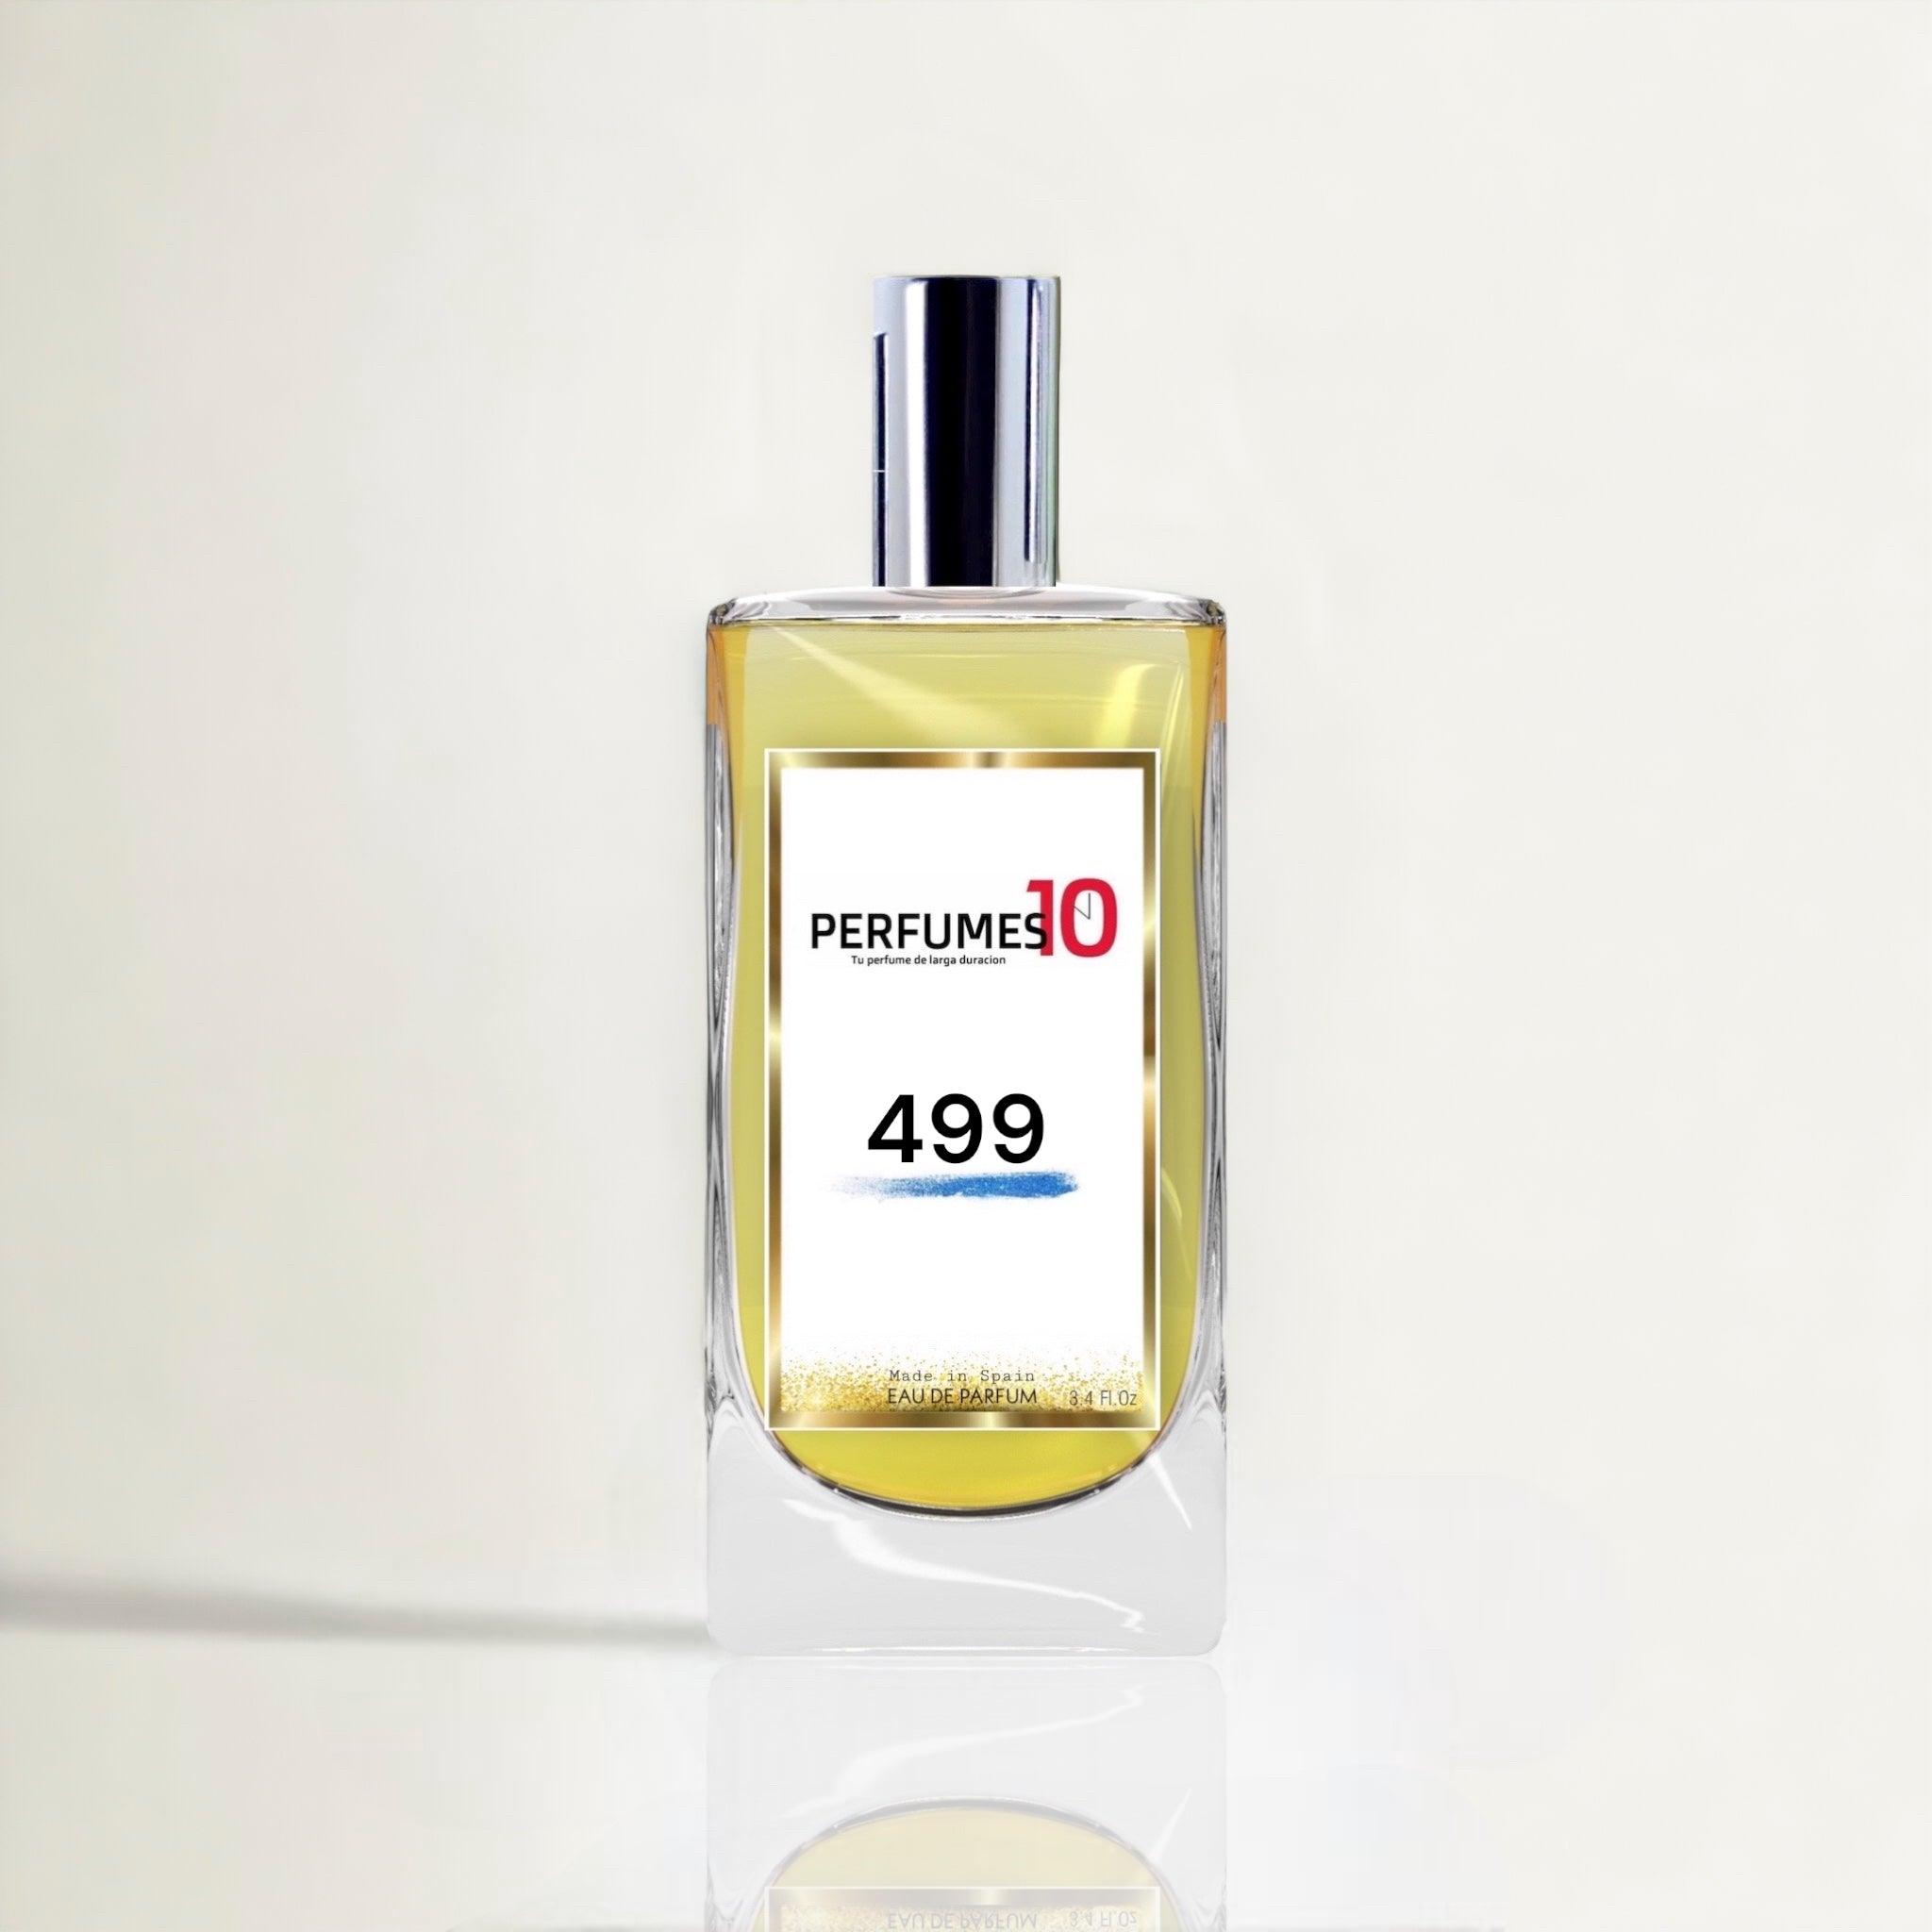 499 • SIMILAR A SCANDAL DE JENPALG MUJER - Perfumes10